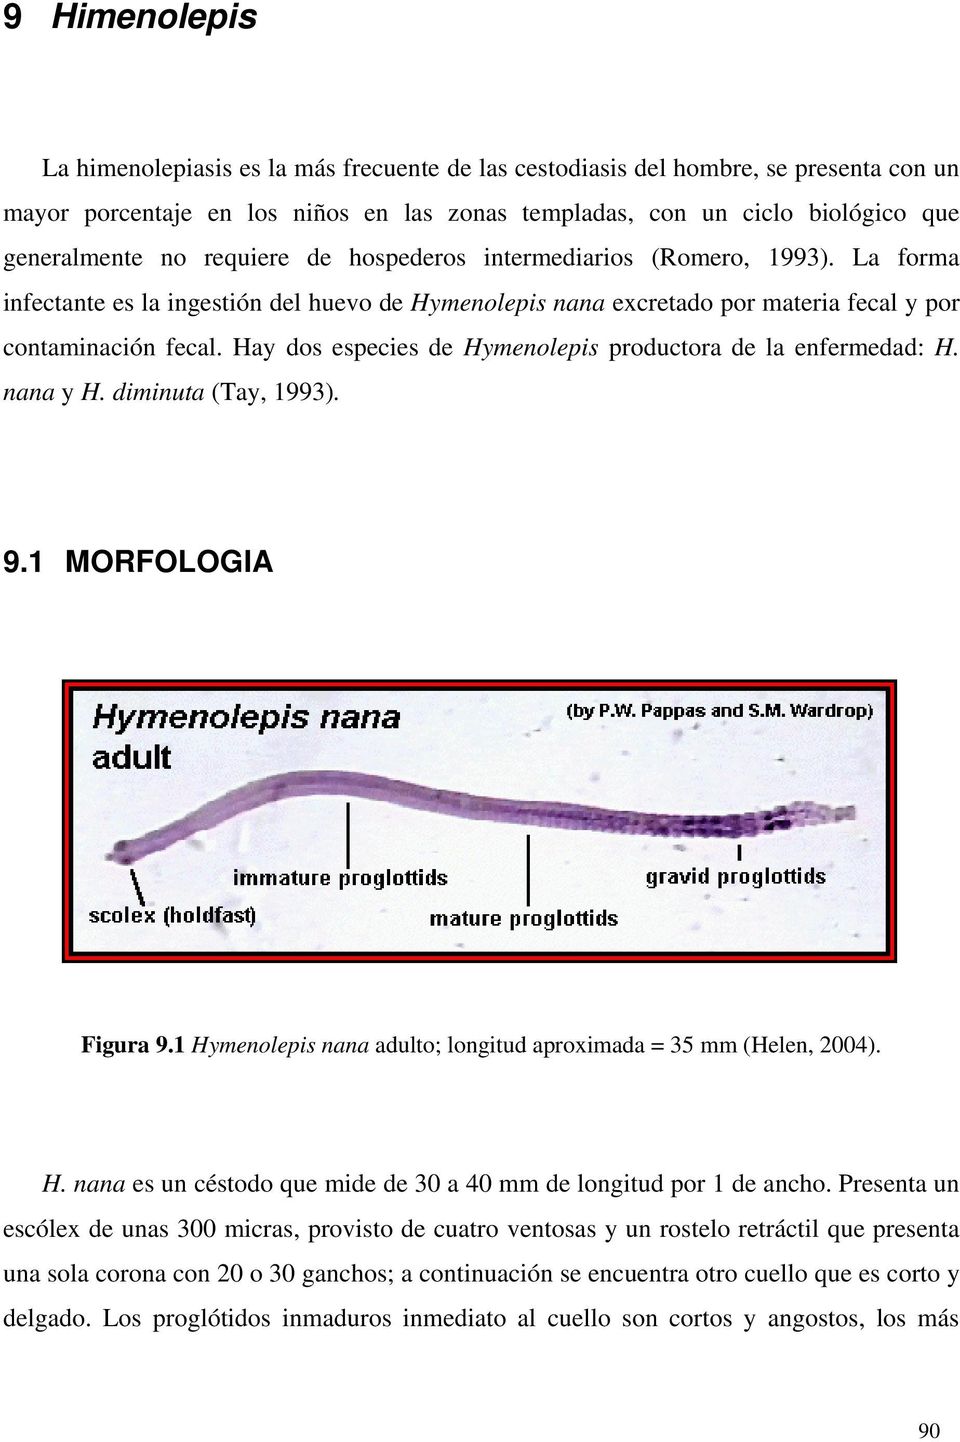 Hay dos especies de Hymenolepis productora de la enfermedad: H. nana y H. diminuta (Tay, 1993). 9.1 MORFOLOGIA Figura 9.1 Hymenolepis nana adulto; longitud aproximada = 35 mm (Helen, 2004). H. nana es un céstodo que mide de 30 a 40 mm de longitud por 1 de ancho.